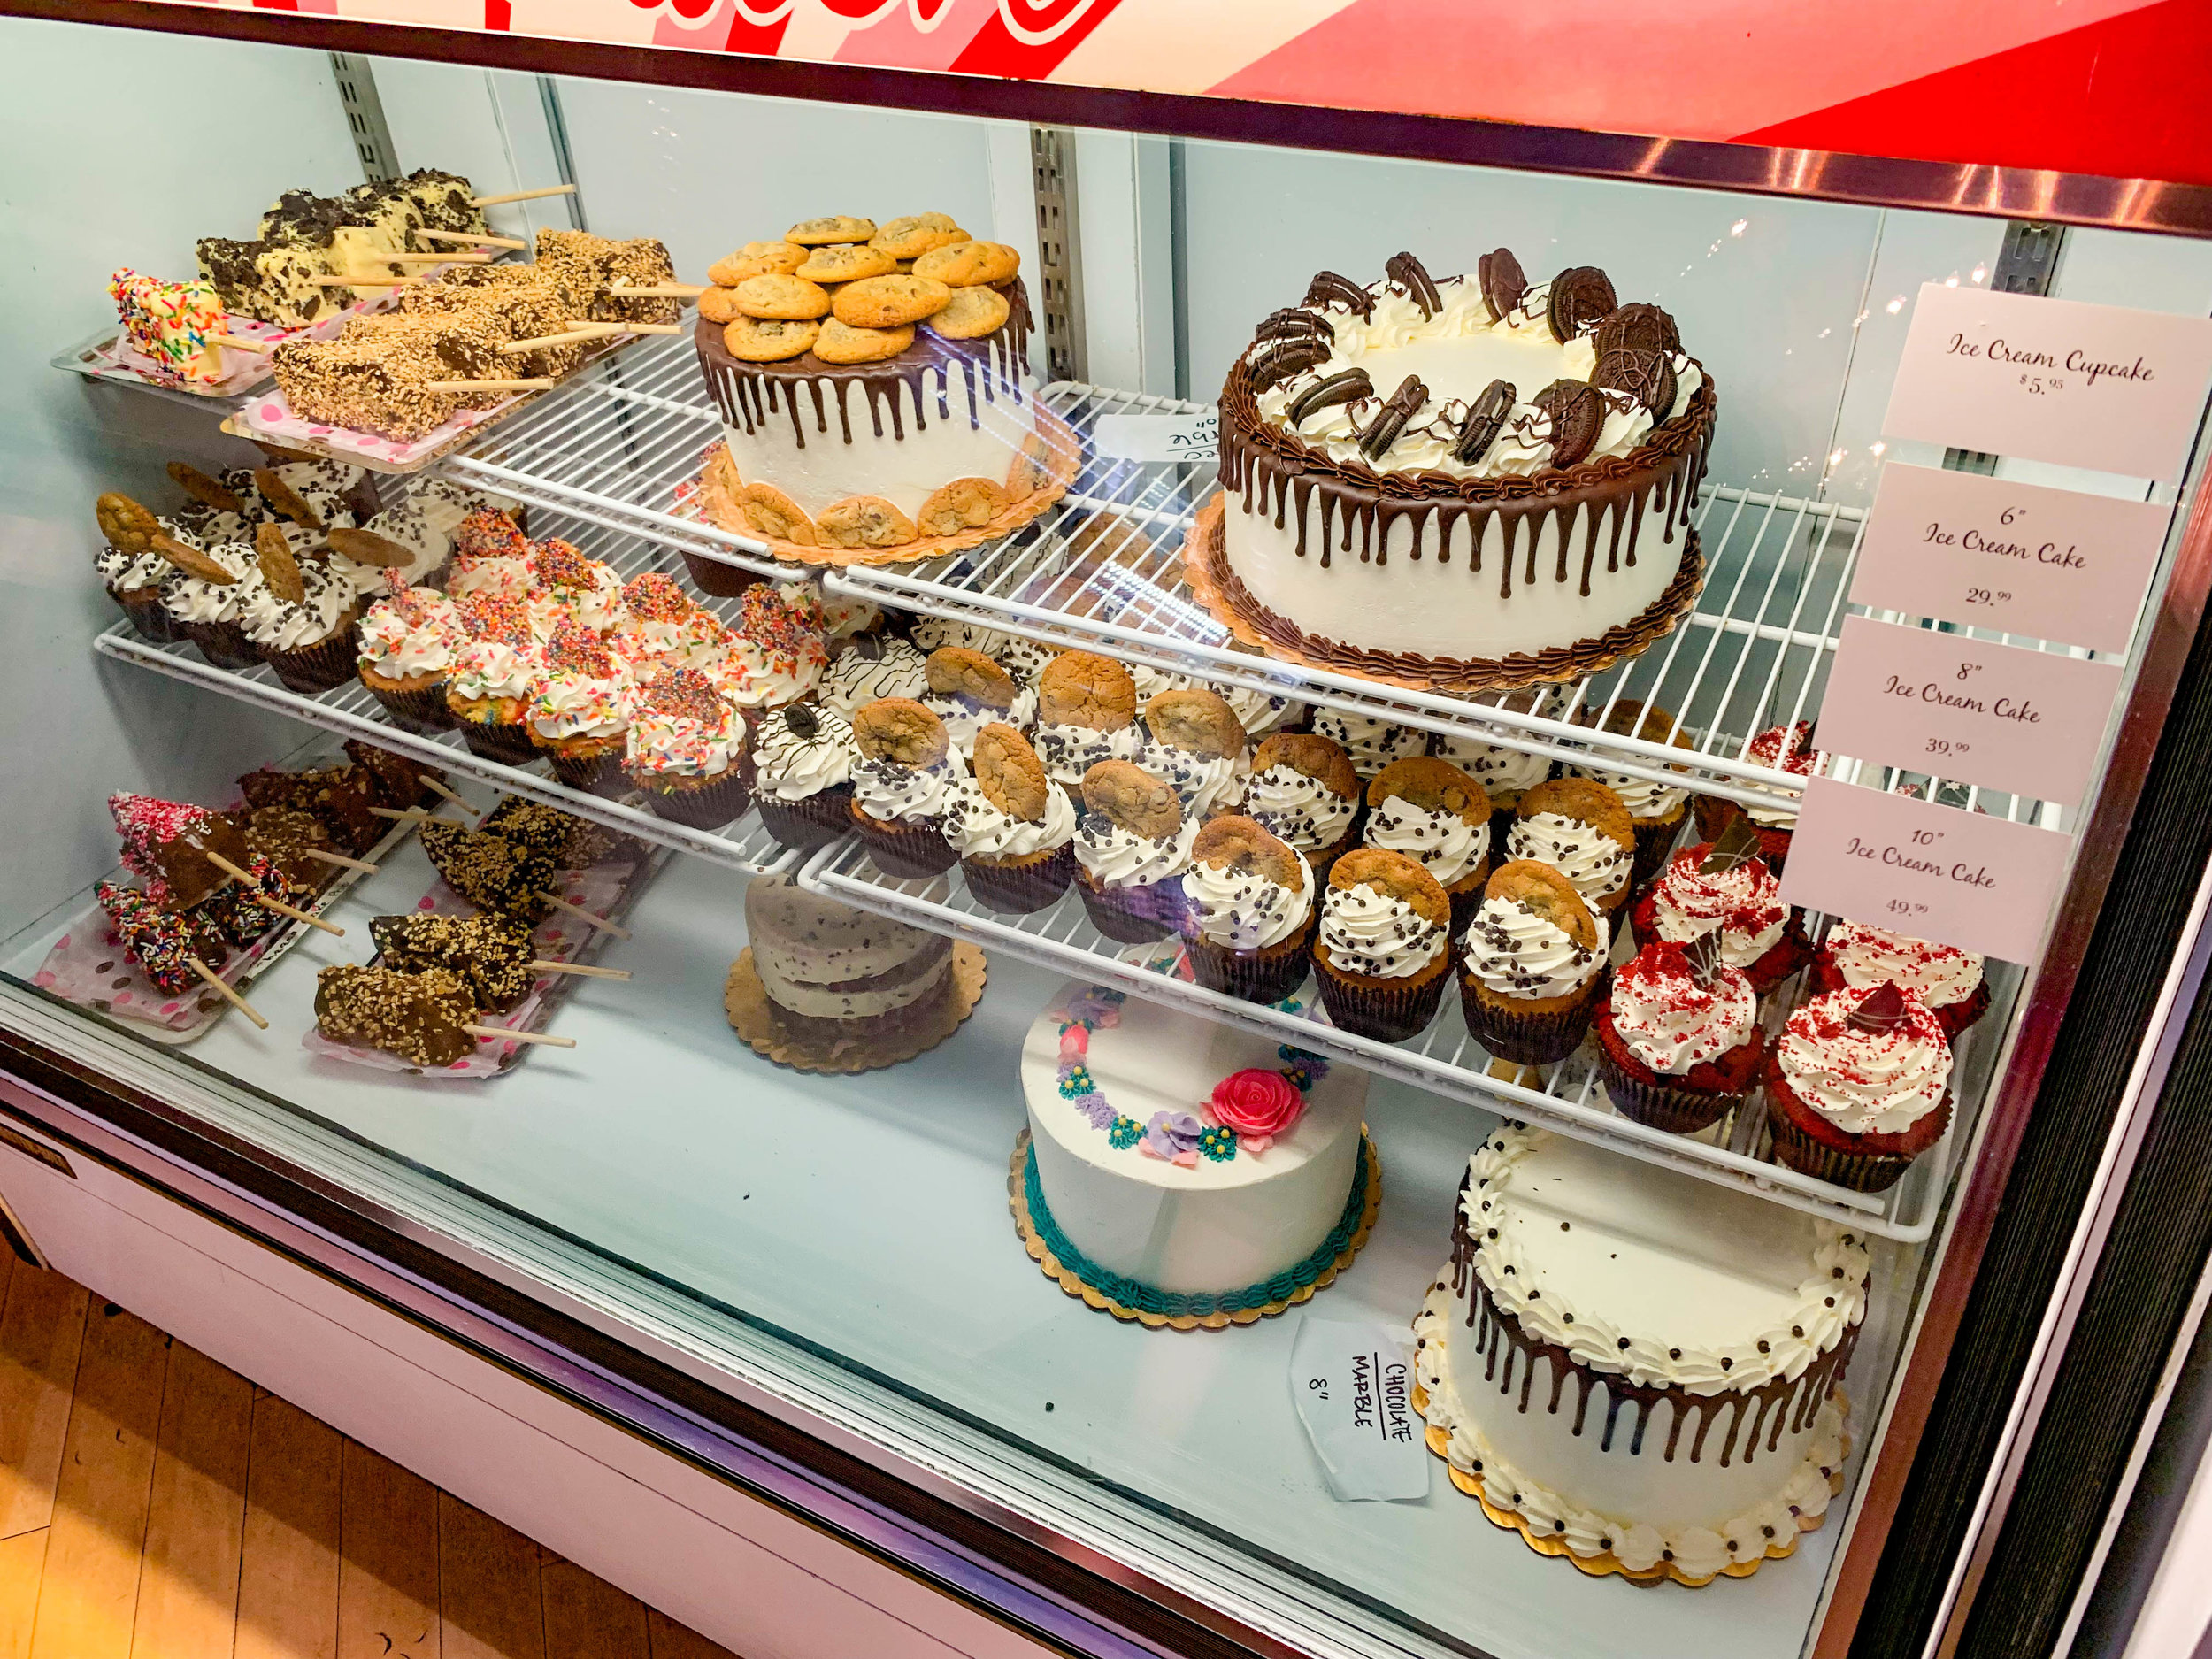 Manhattan Beach Creamery Cupcakes and cakes